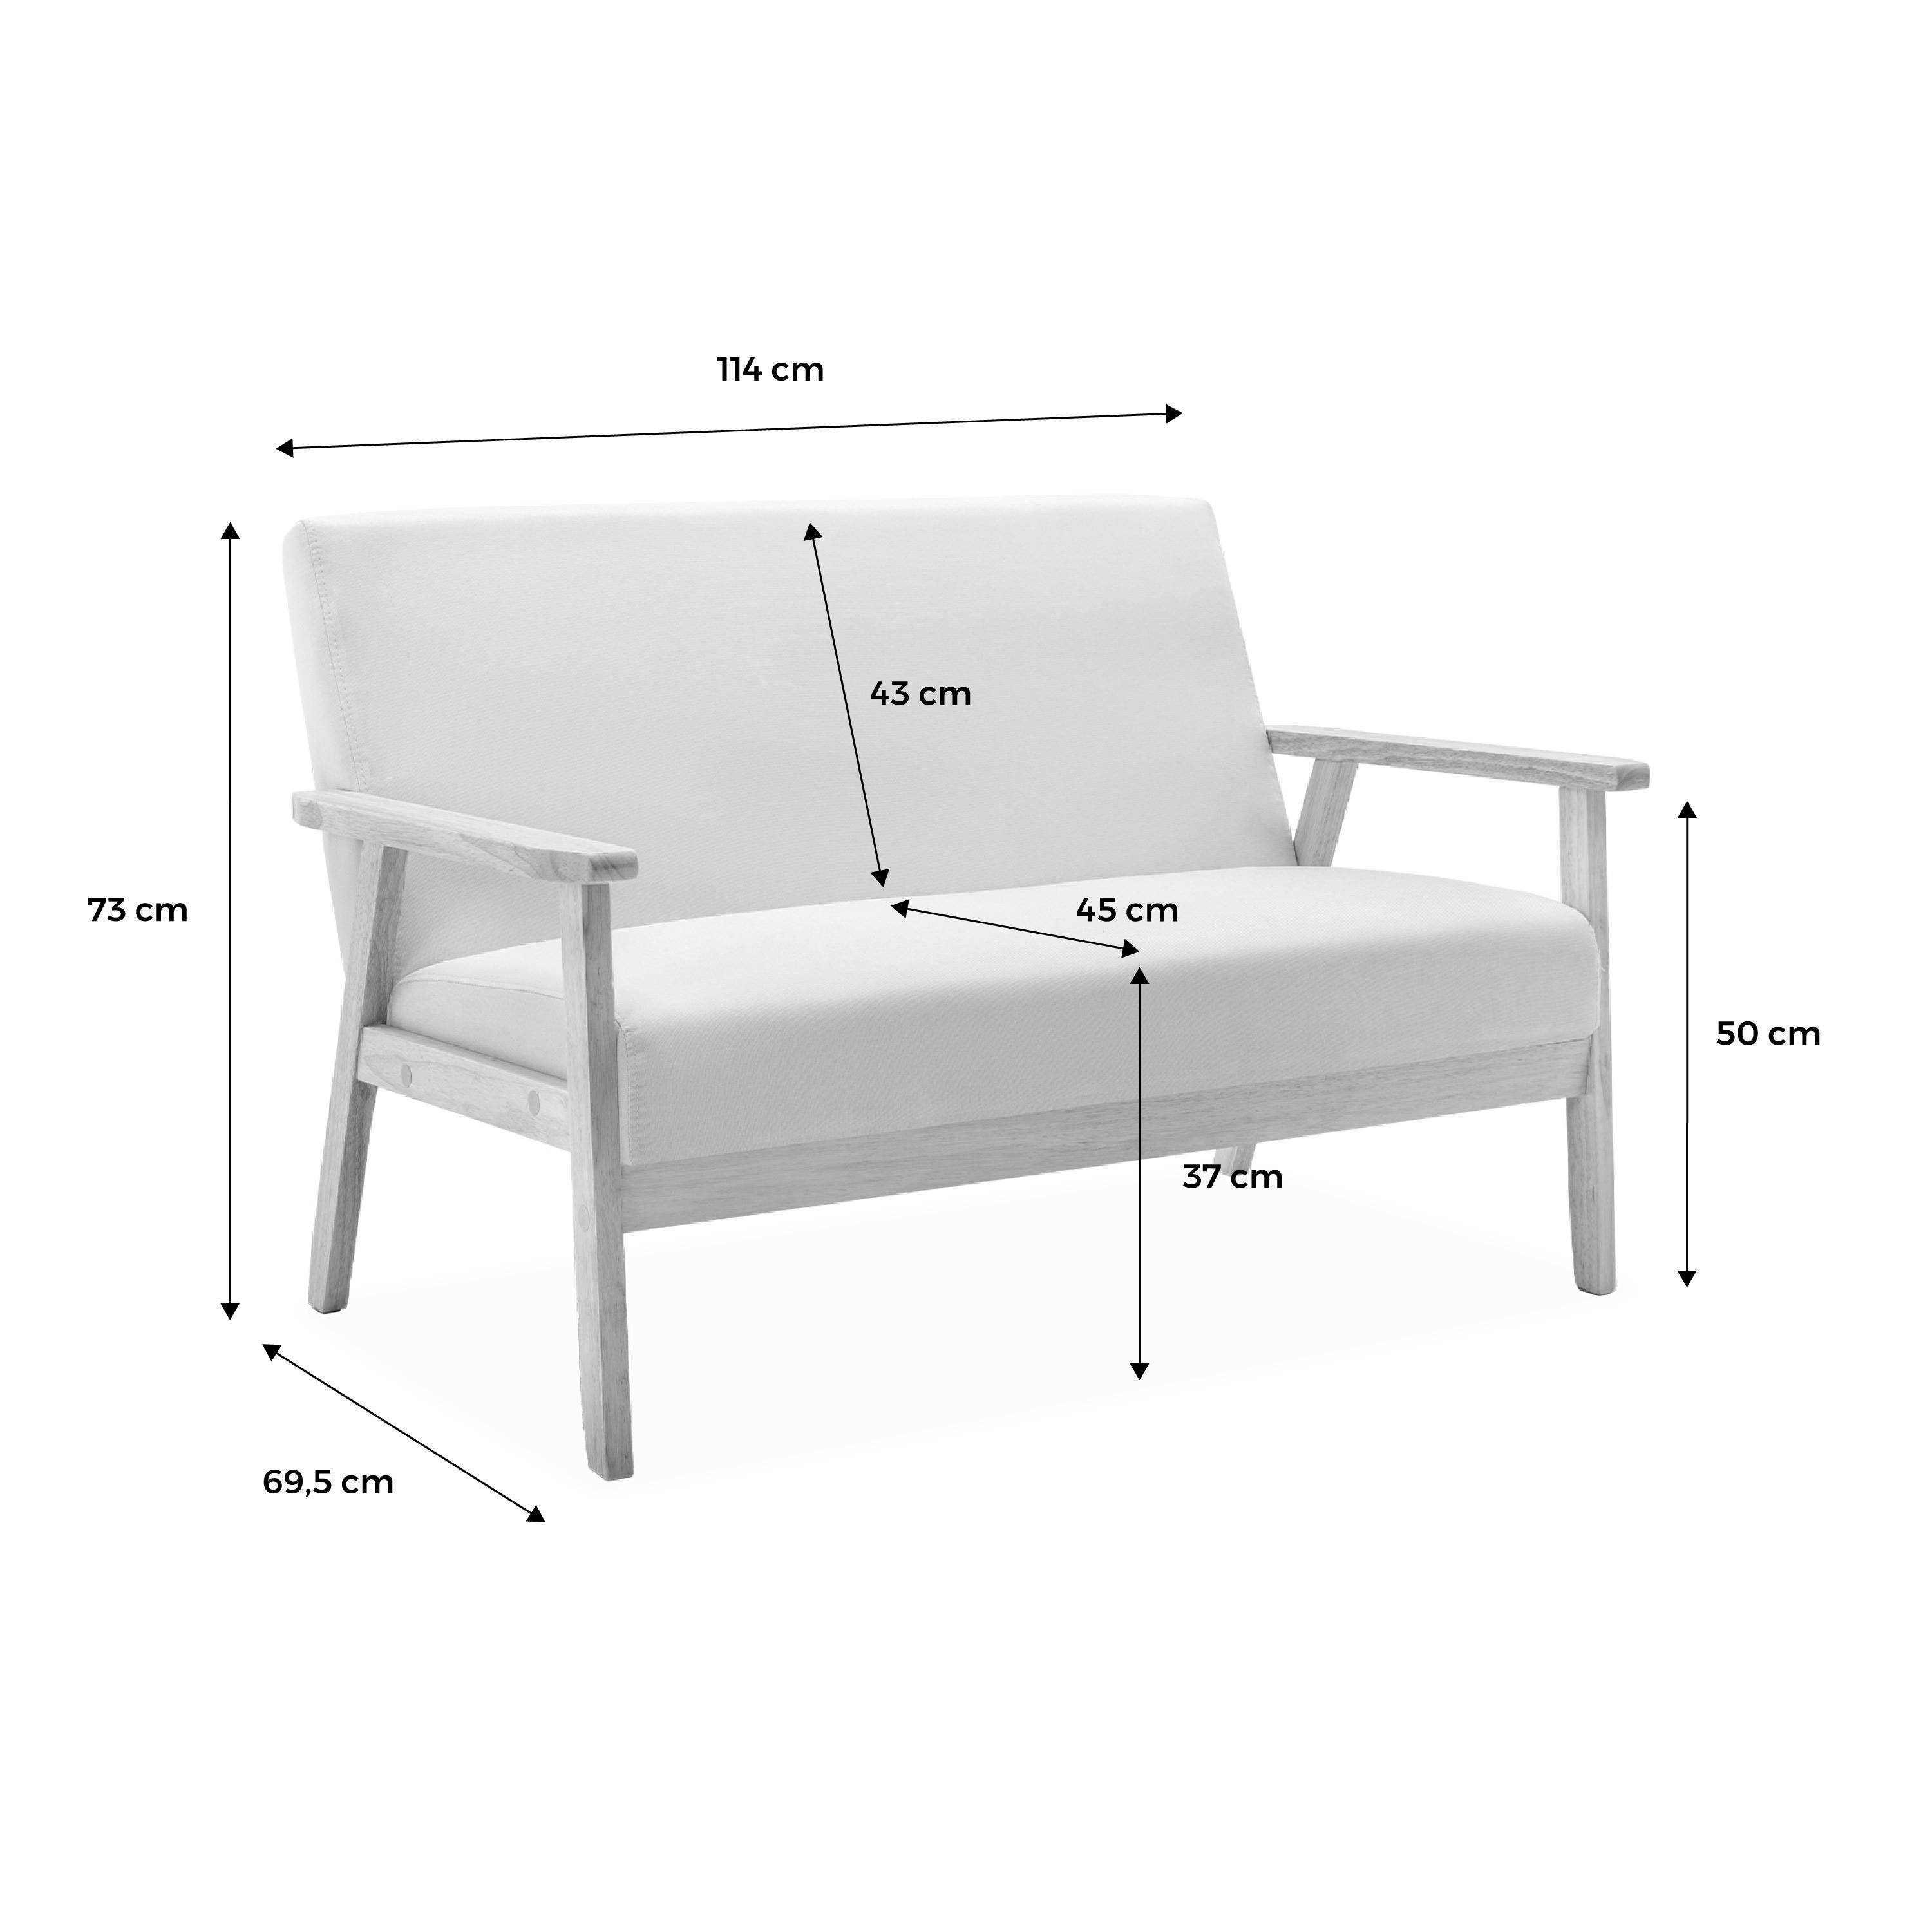 Banco y sillón de madera y tela gris oscuro, Isak, L 114 x A 69,5 x A 73 cm Photo8